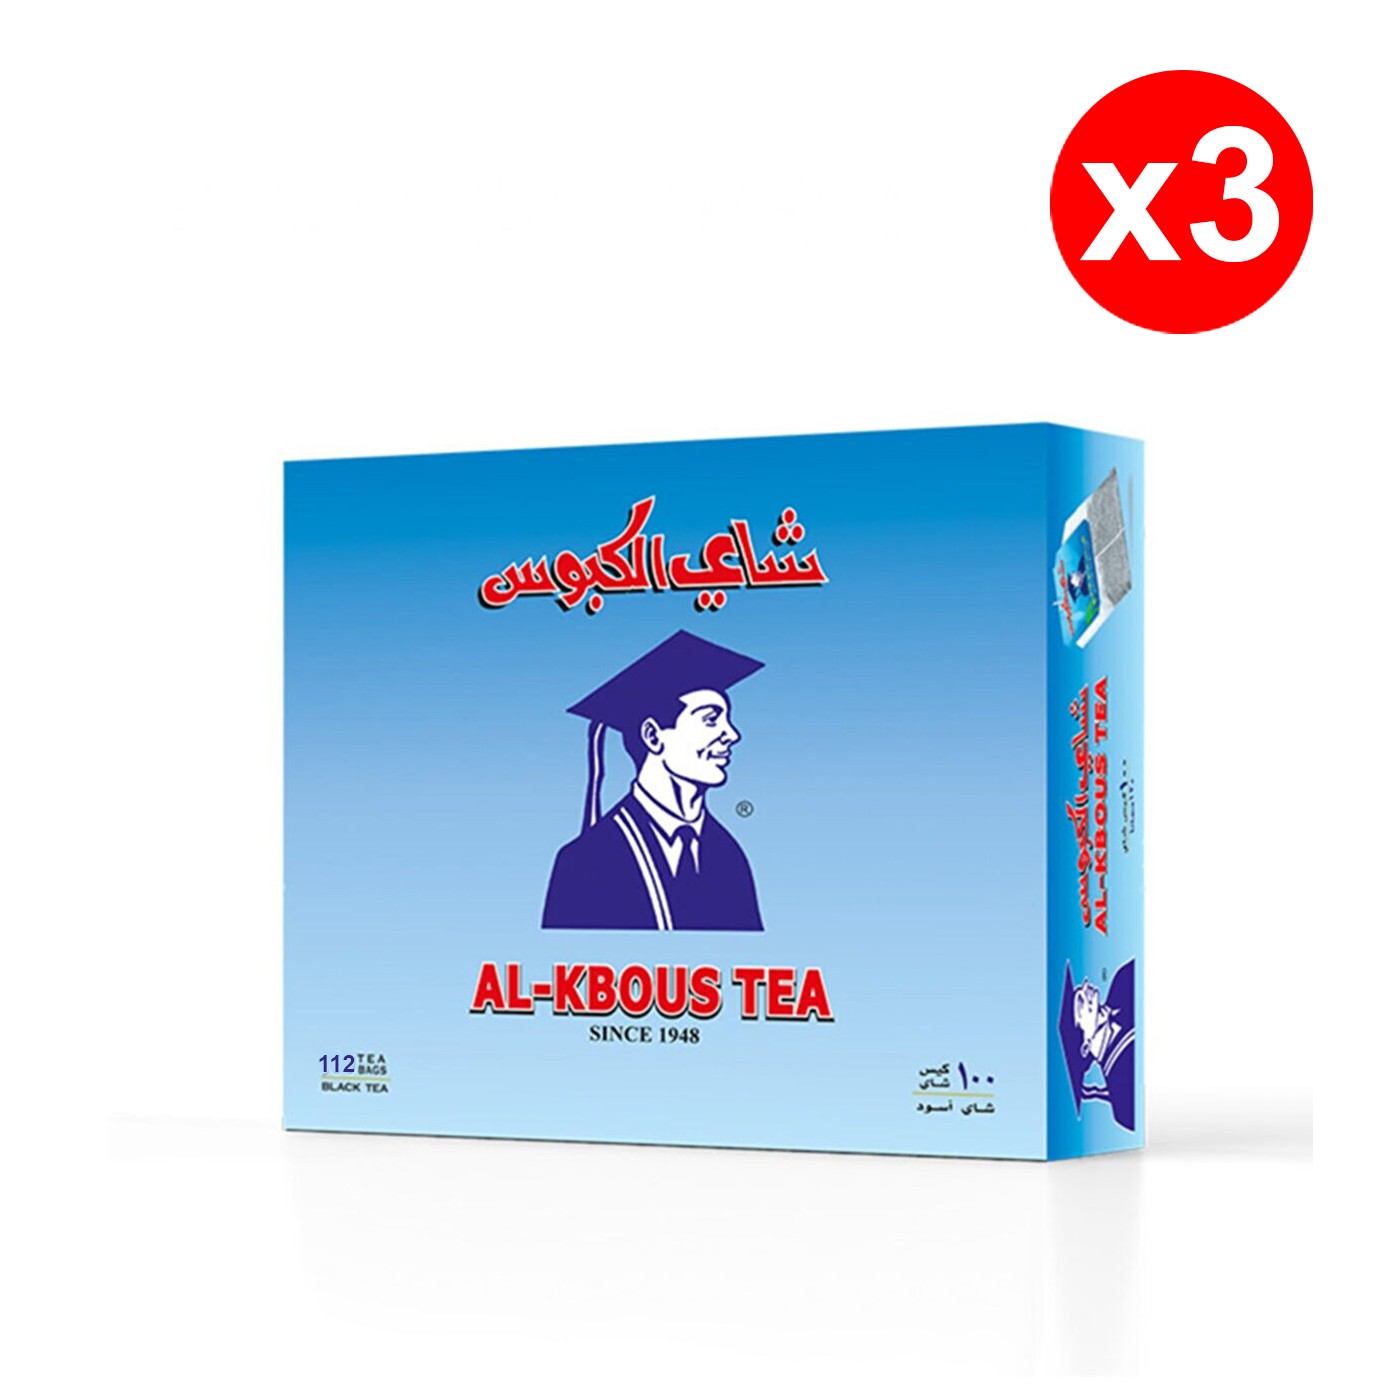  AL-KBOUS BLACK TEA 100-PACK TEA 3 BAGS